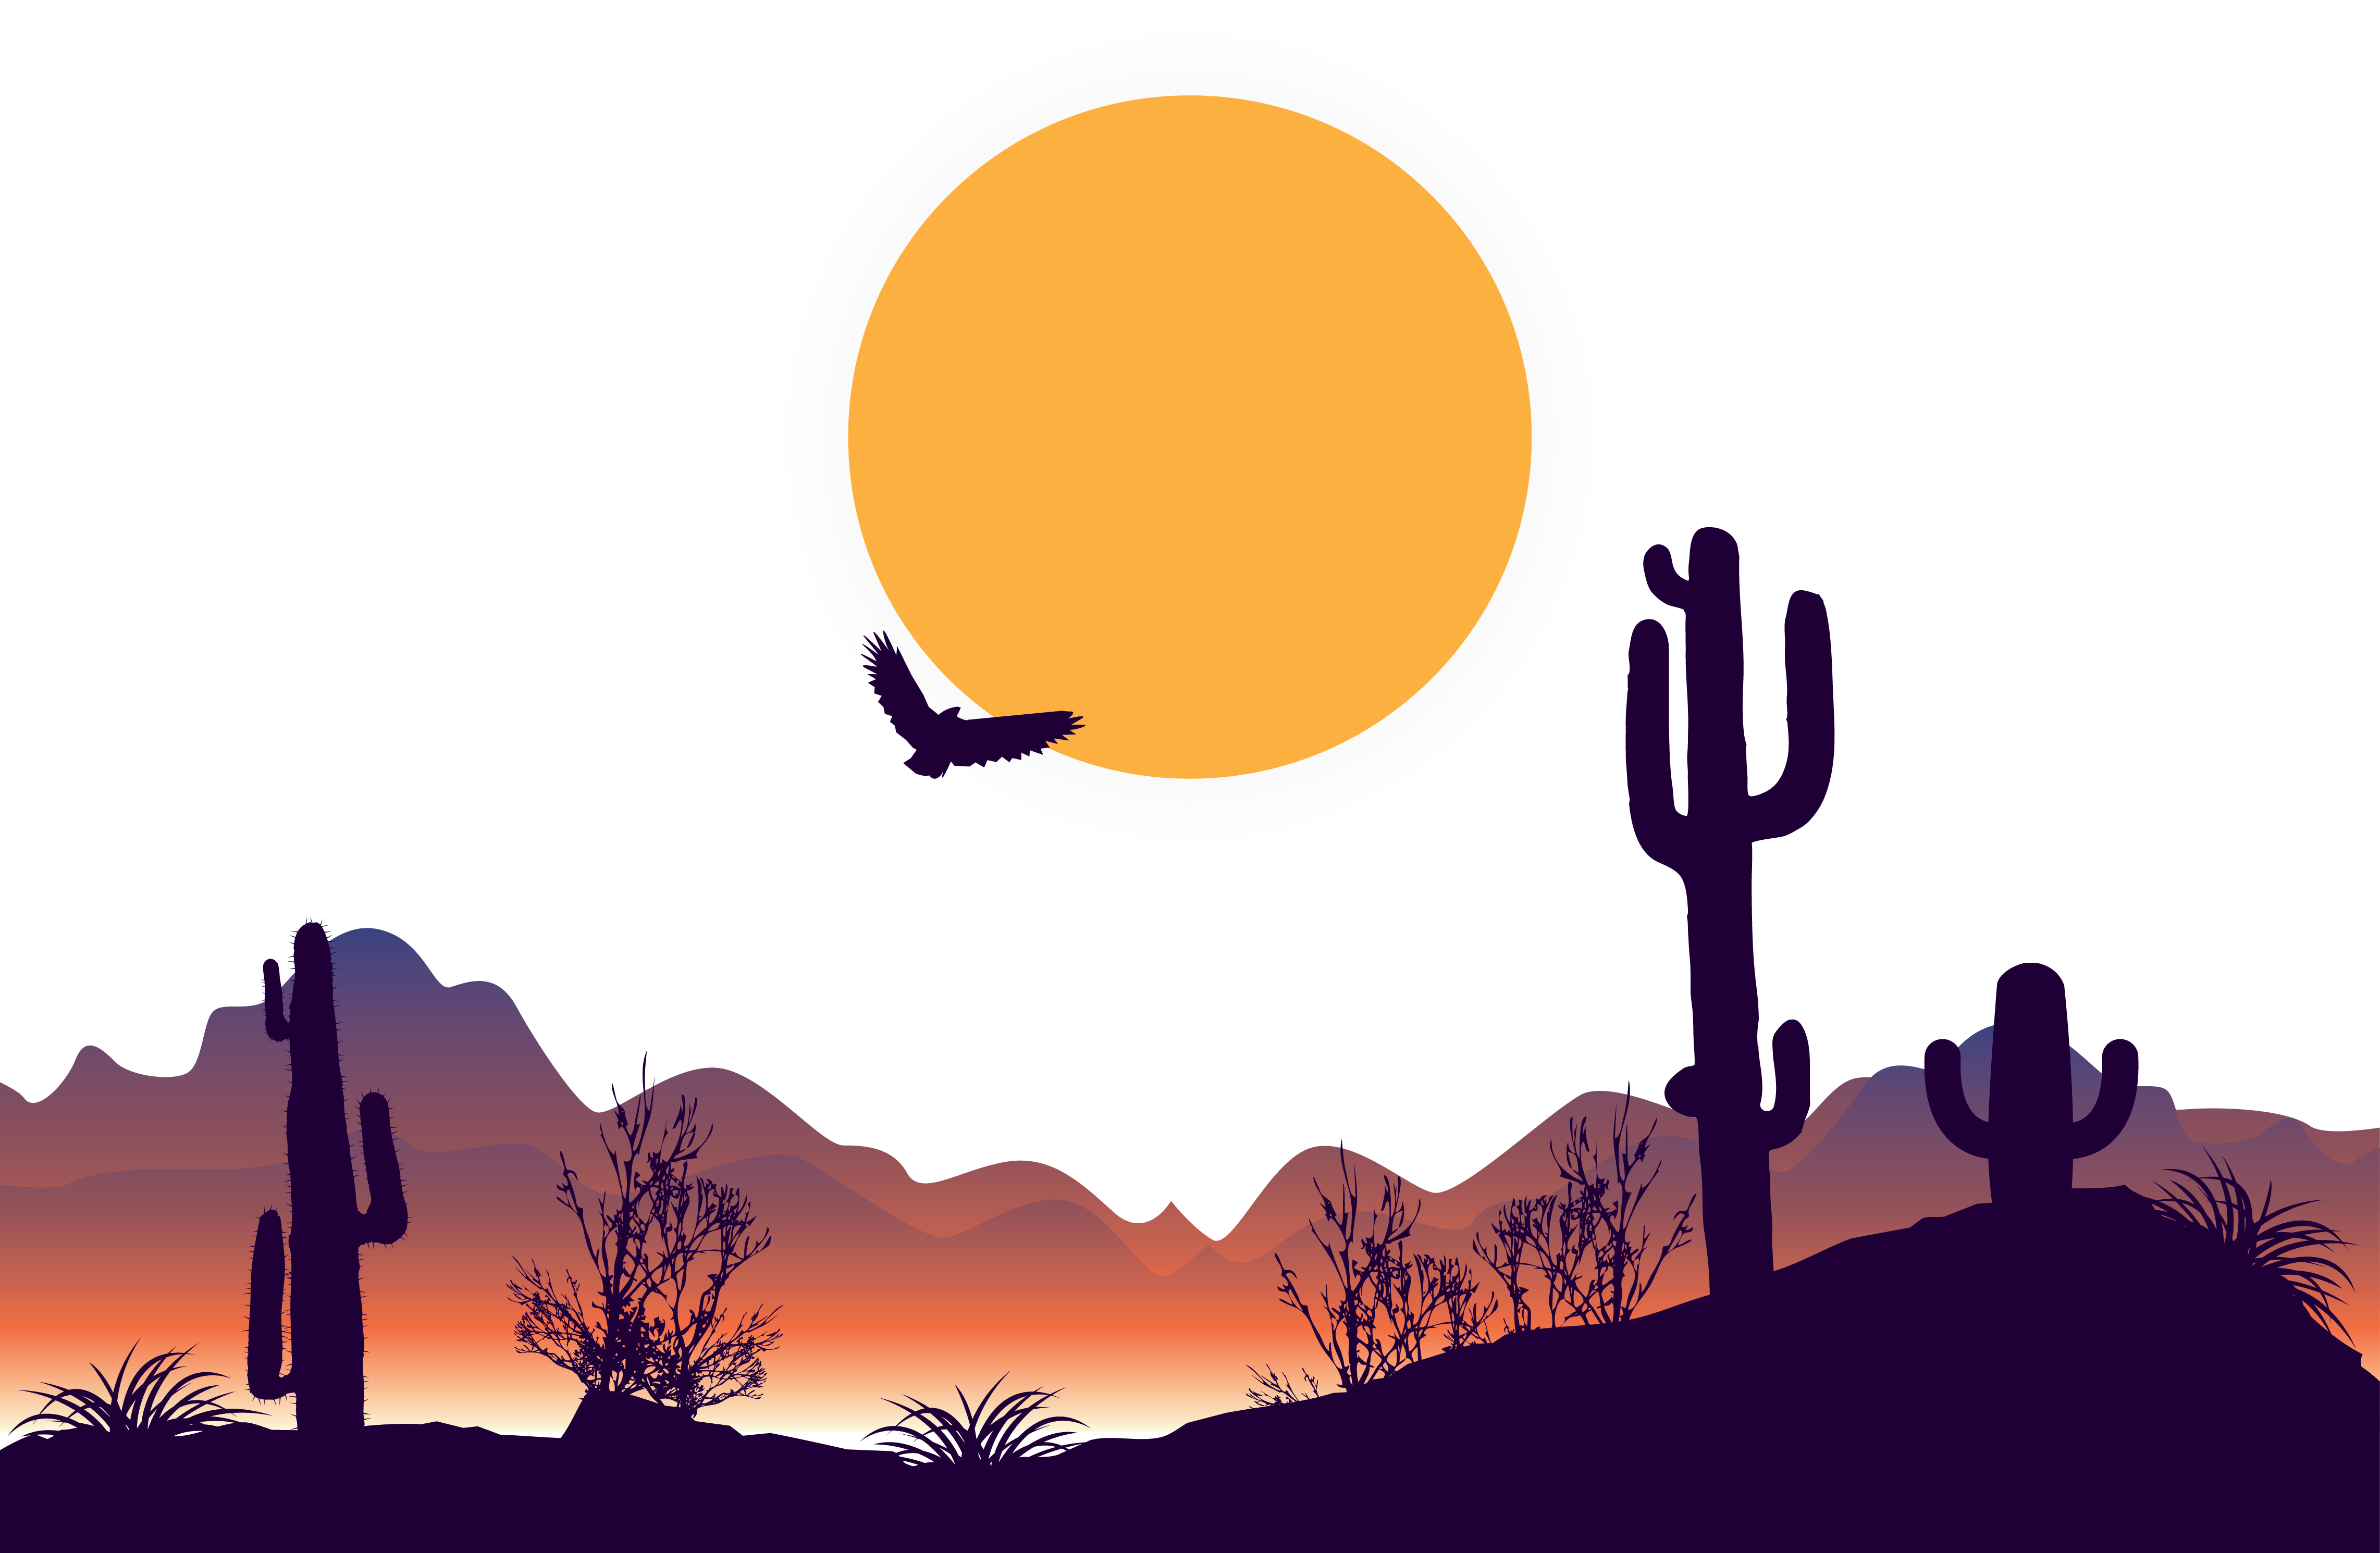 Desert clipart desert background. Png images transparent free